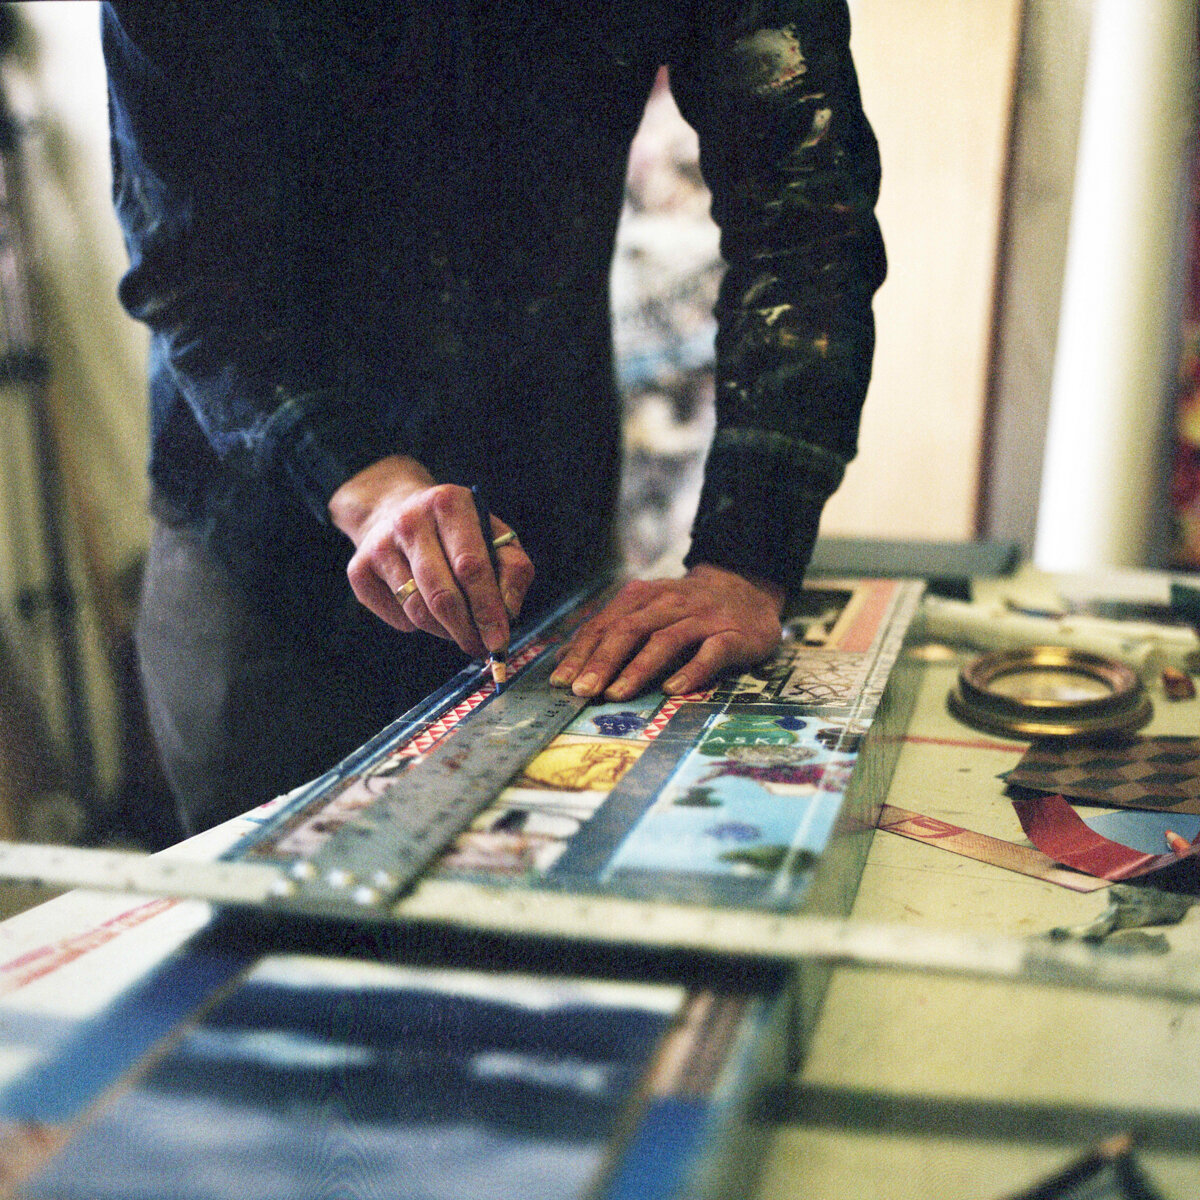 A detail of Montréal mixed media artist Gavin Sewell working in his Montréal studio.